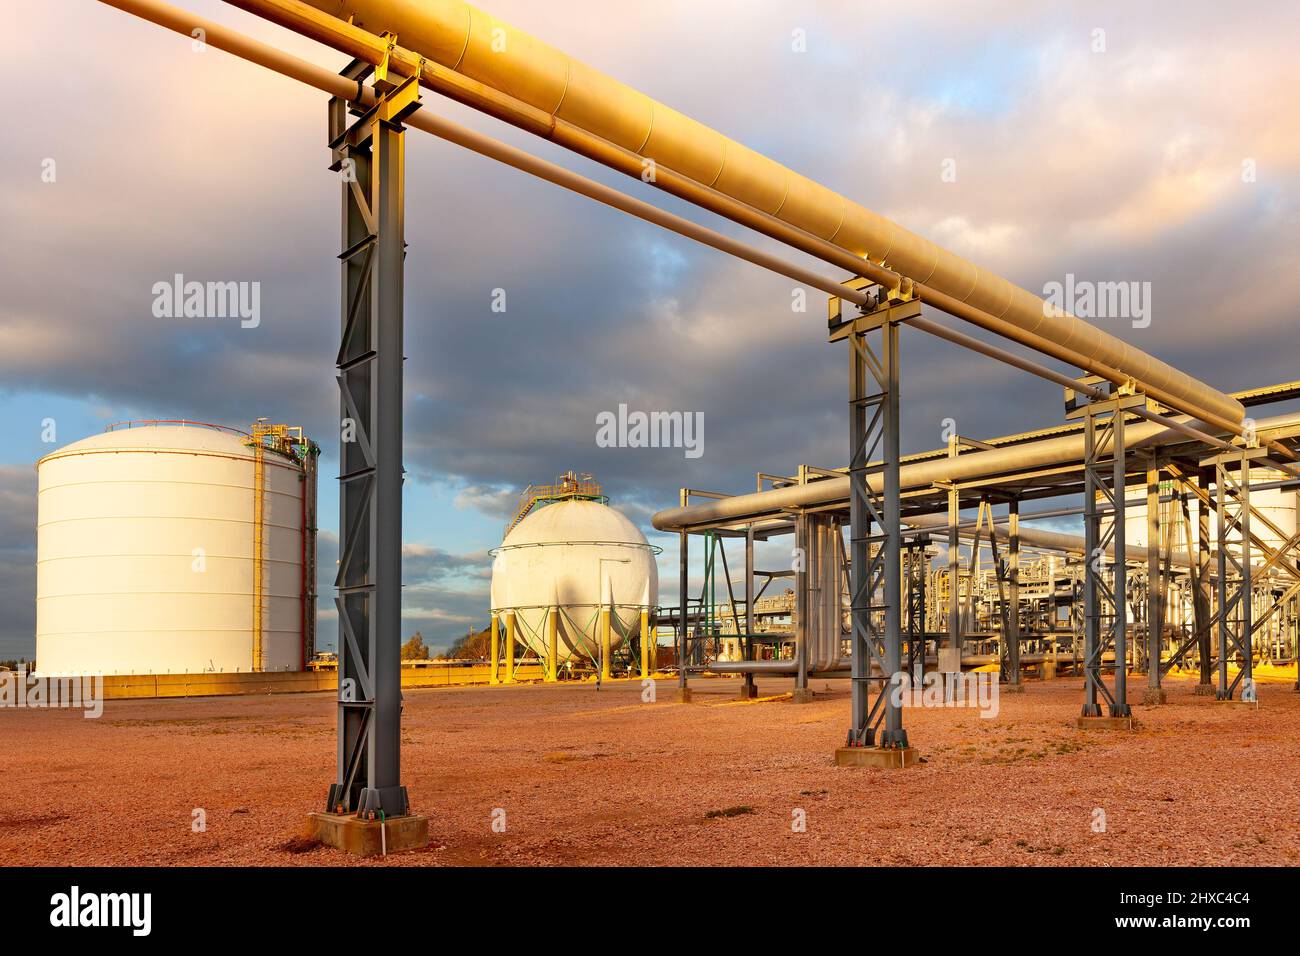 Storage tanks of a gas refinery plant. Stock Photo